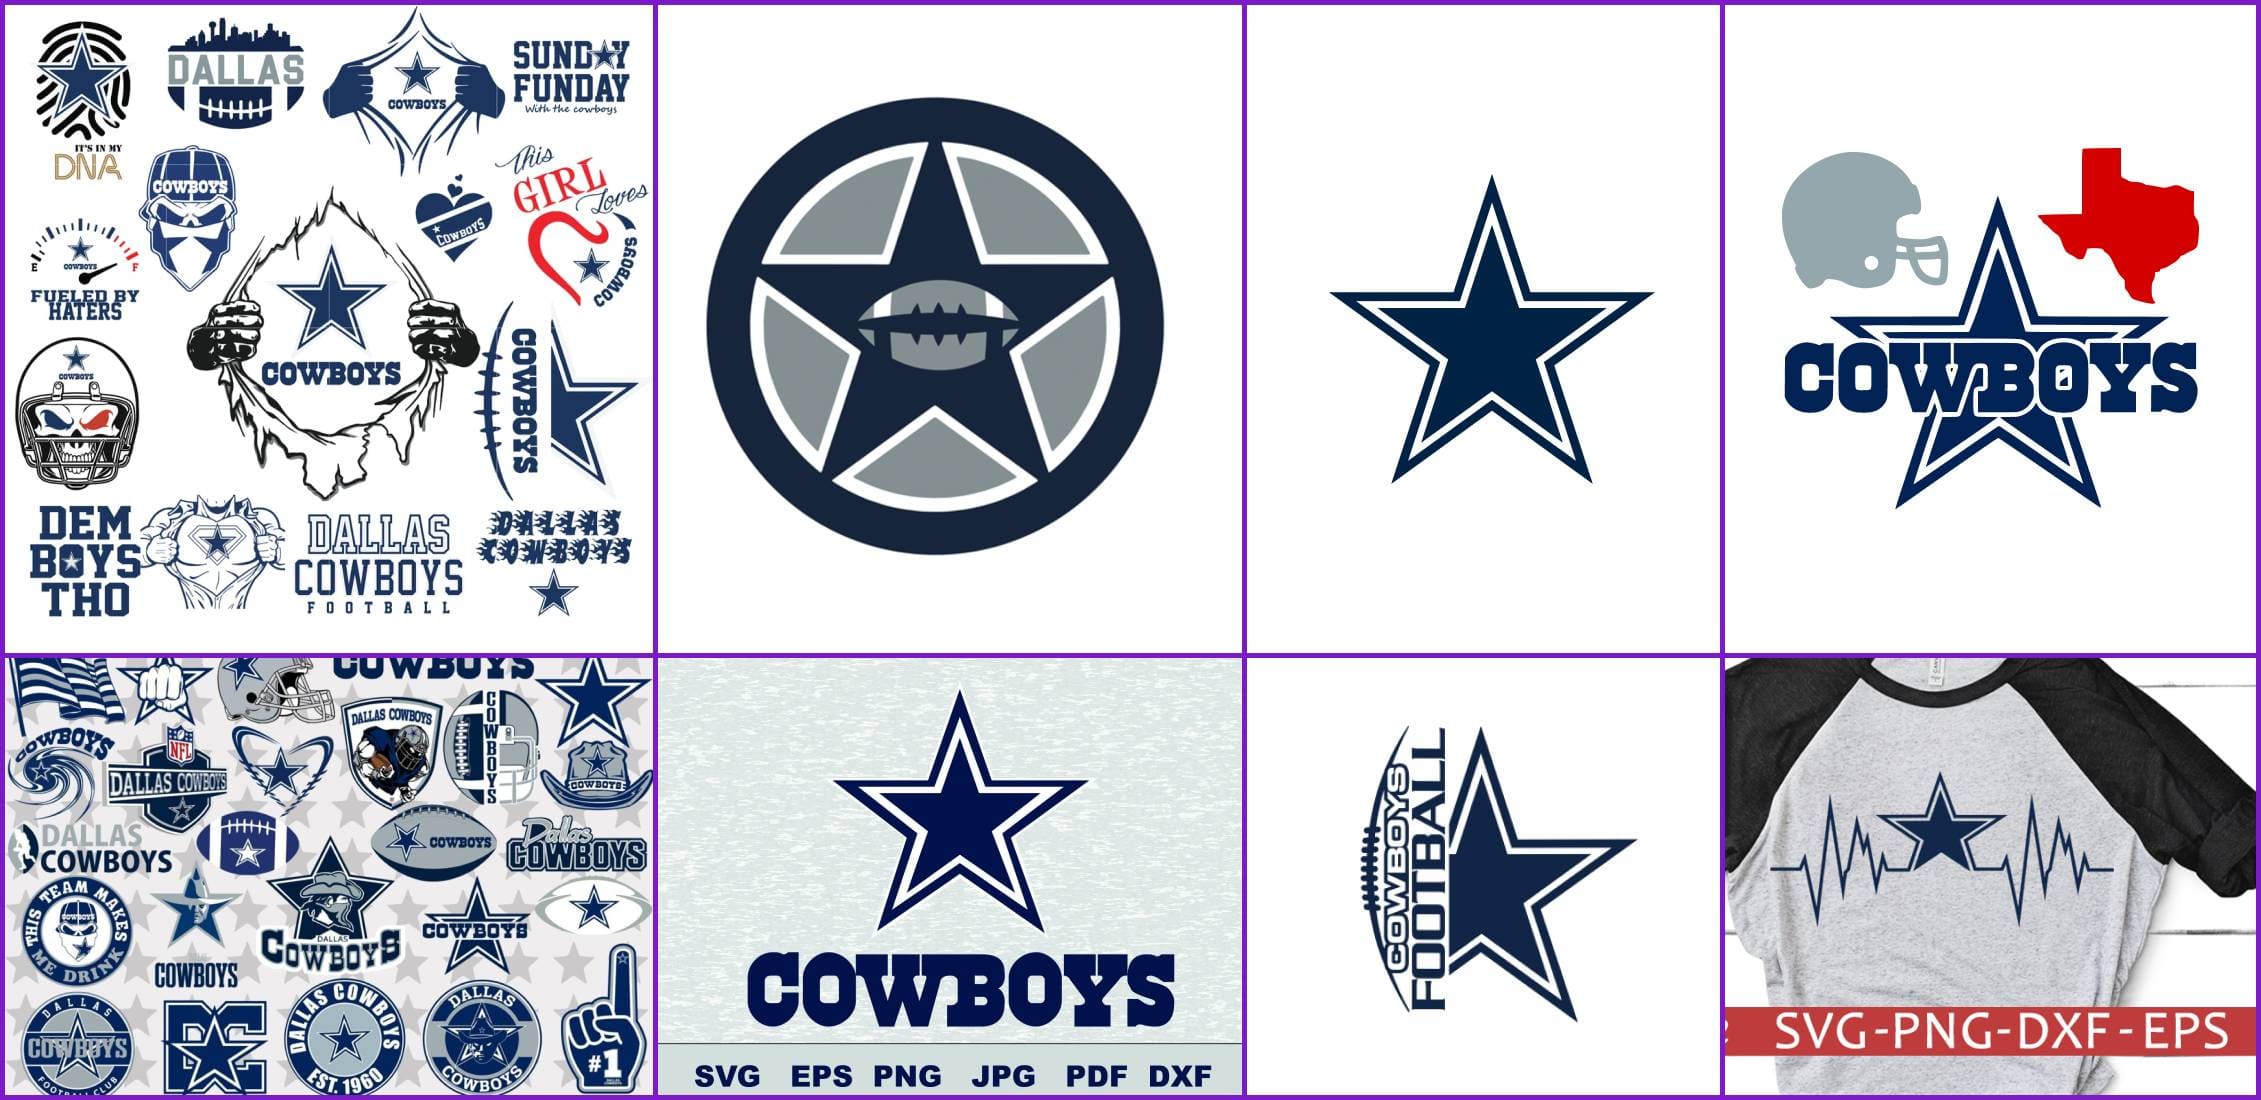 Dallas Cowboys SVG Images Example.